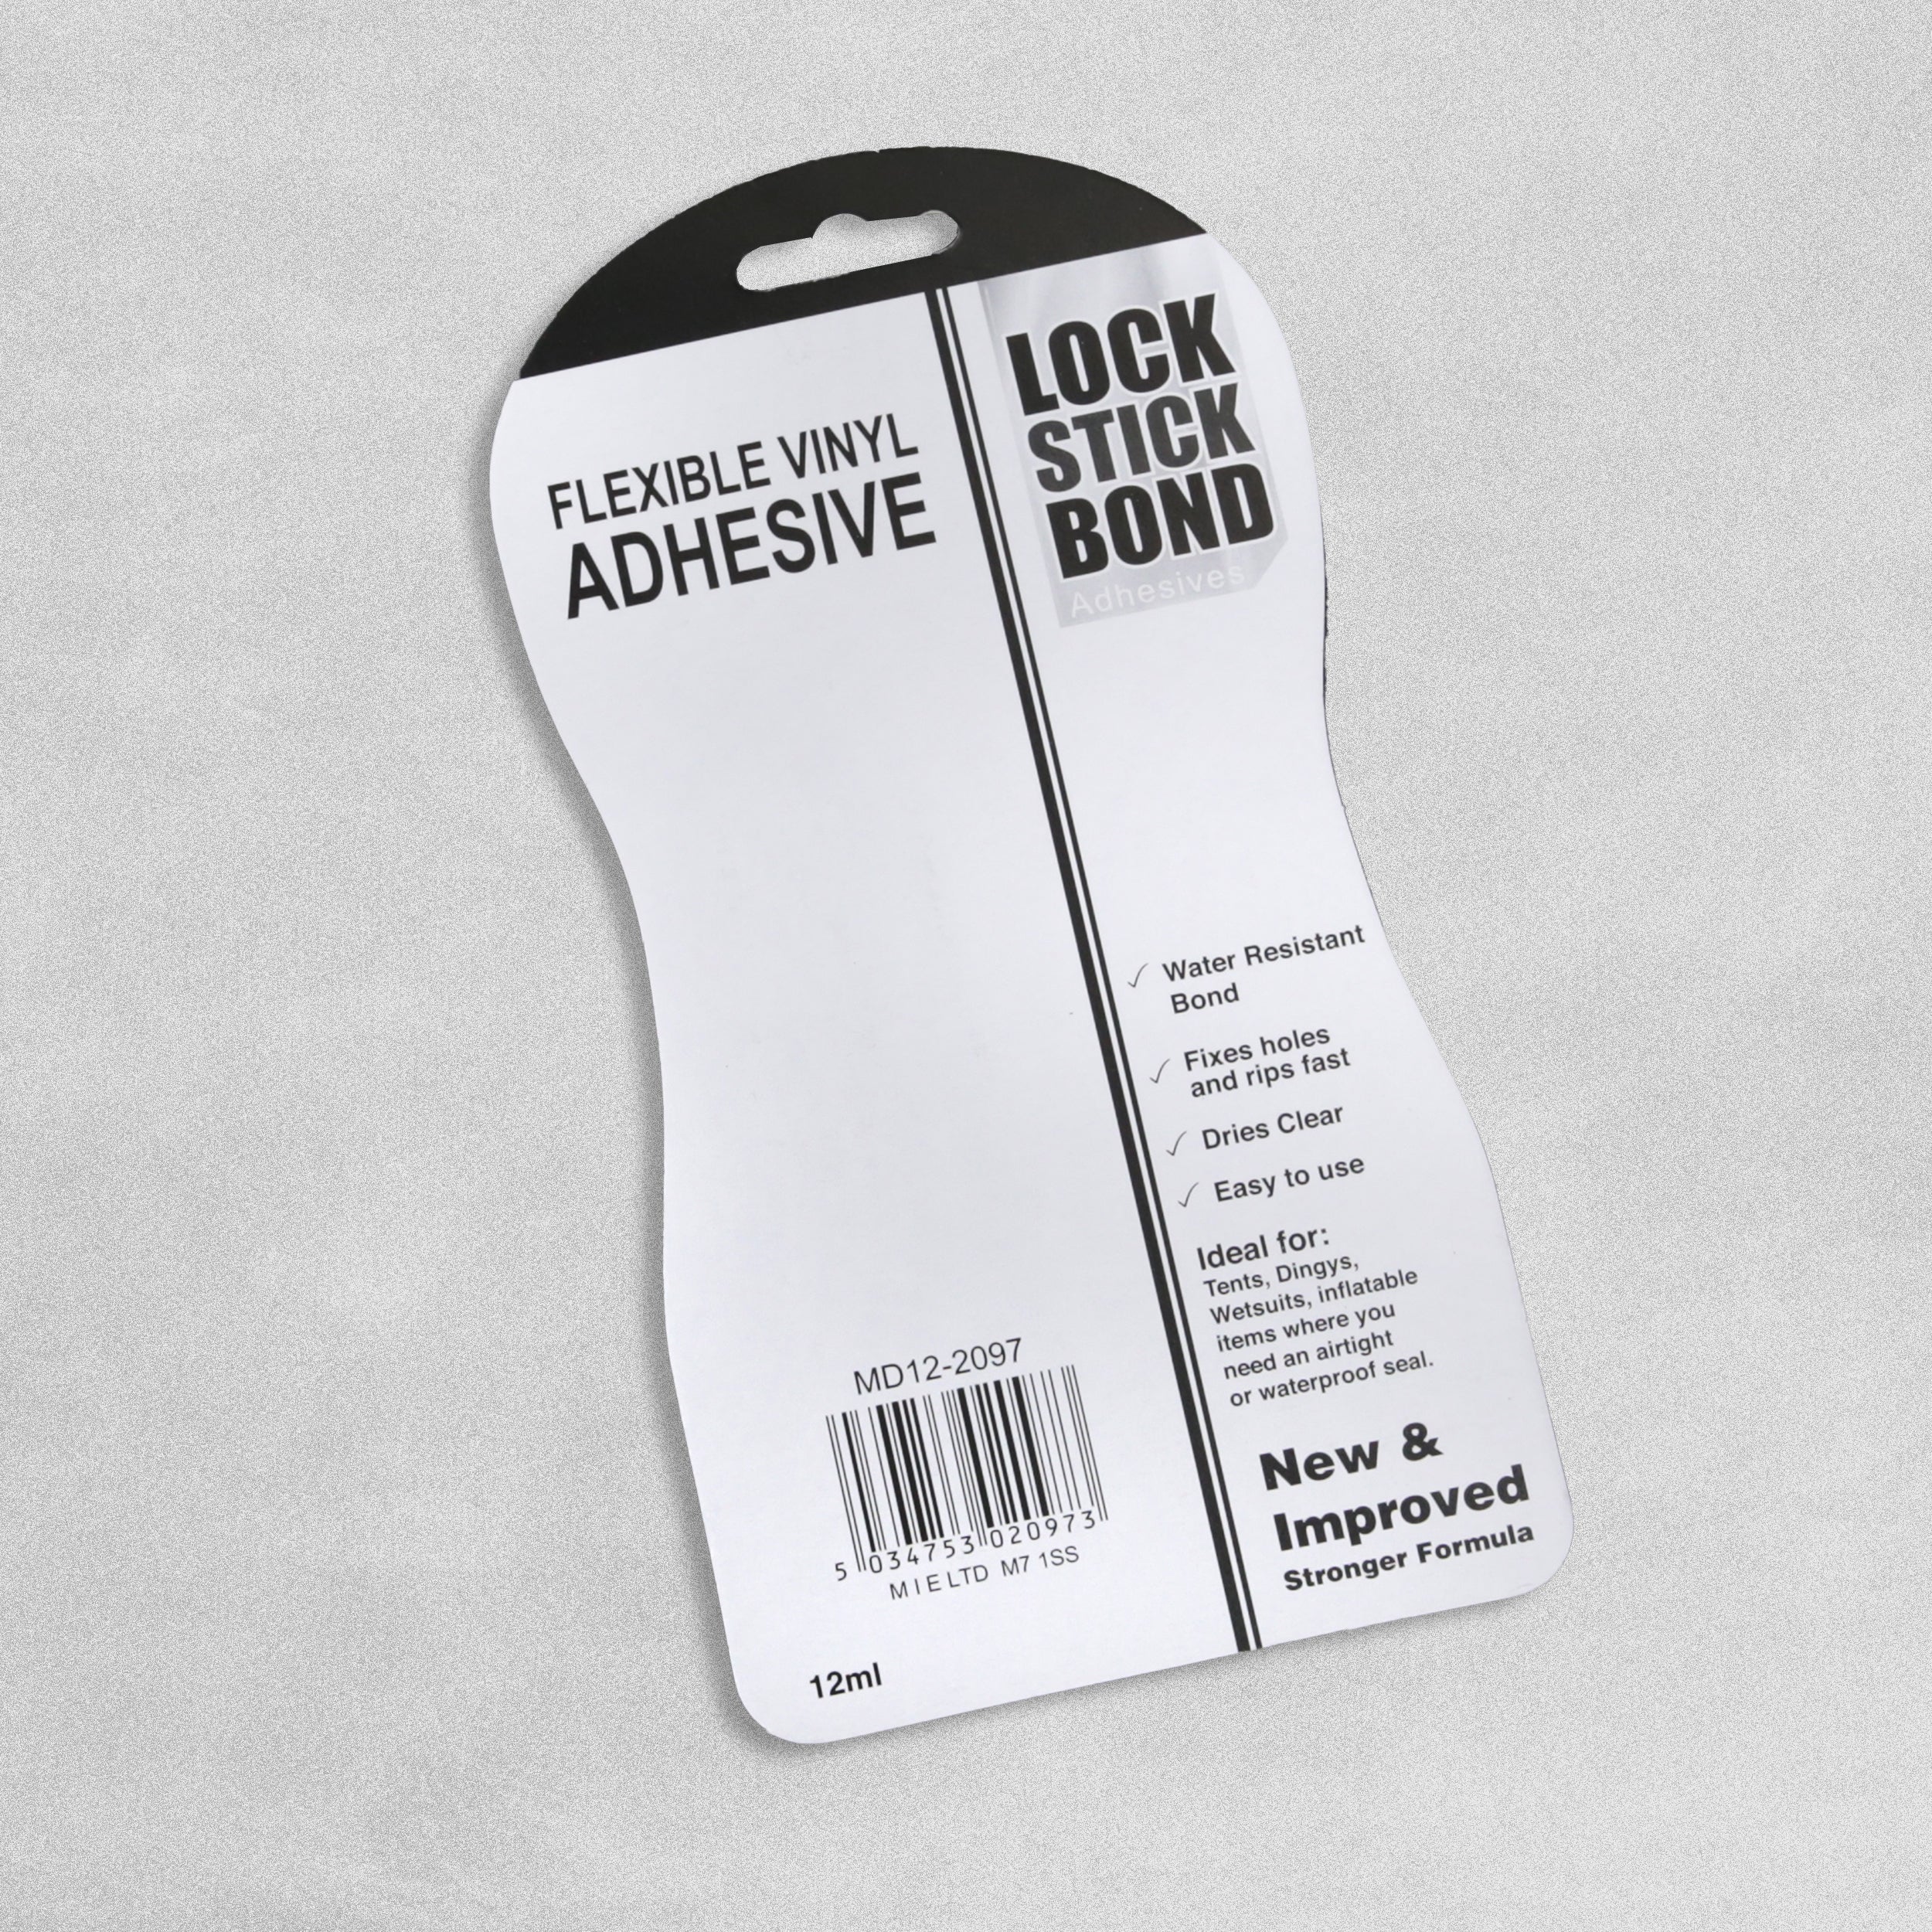 Lock Stick Bond Flexible Vinyl Adhesive - 12ml